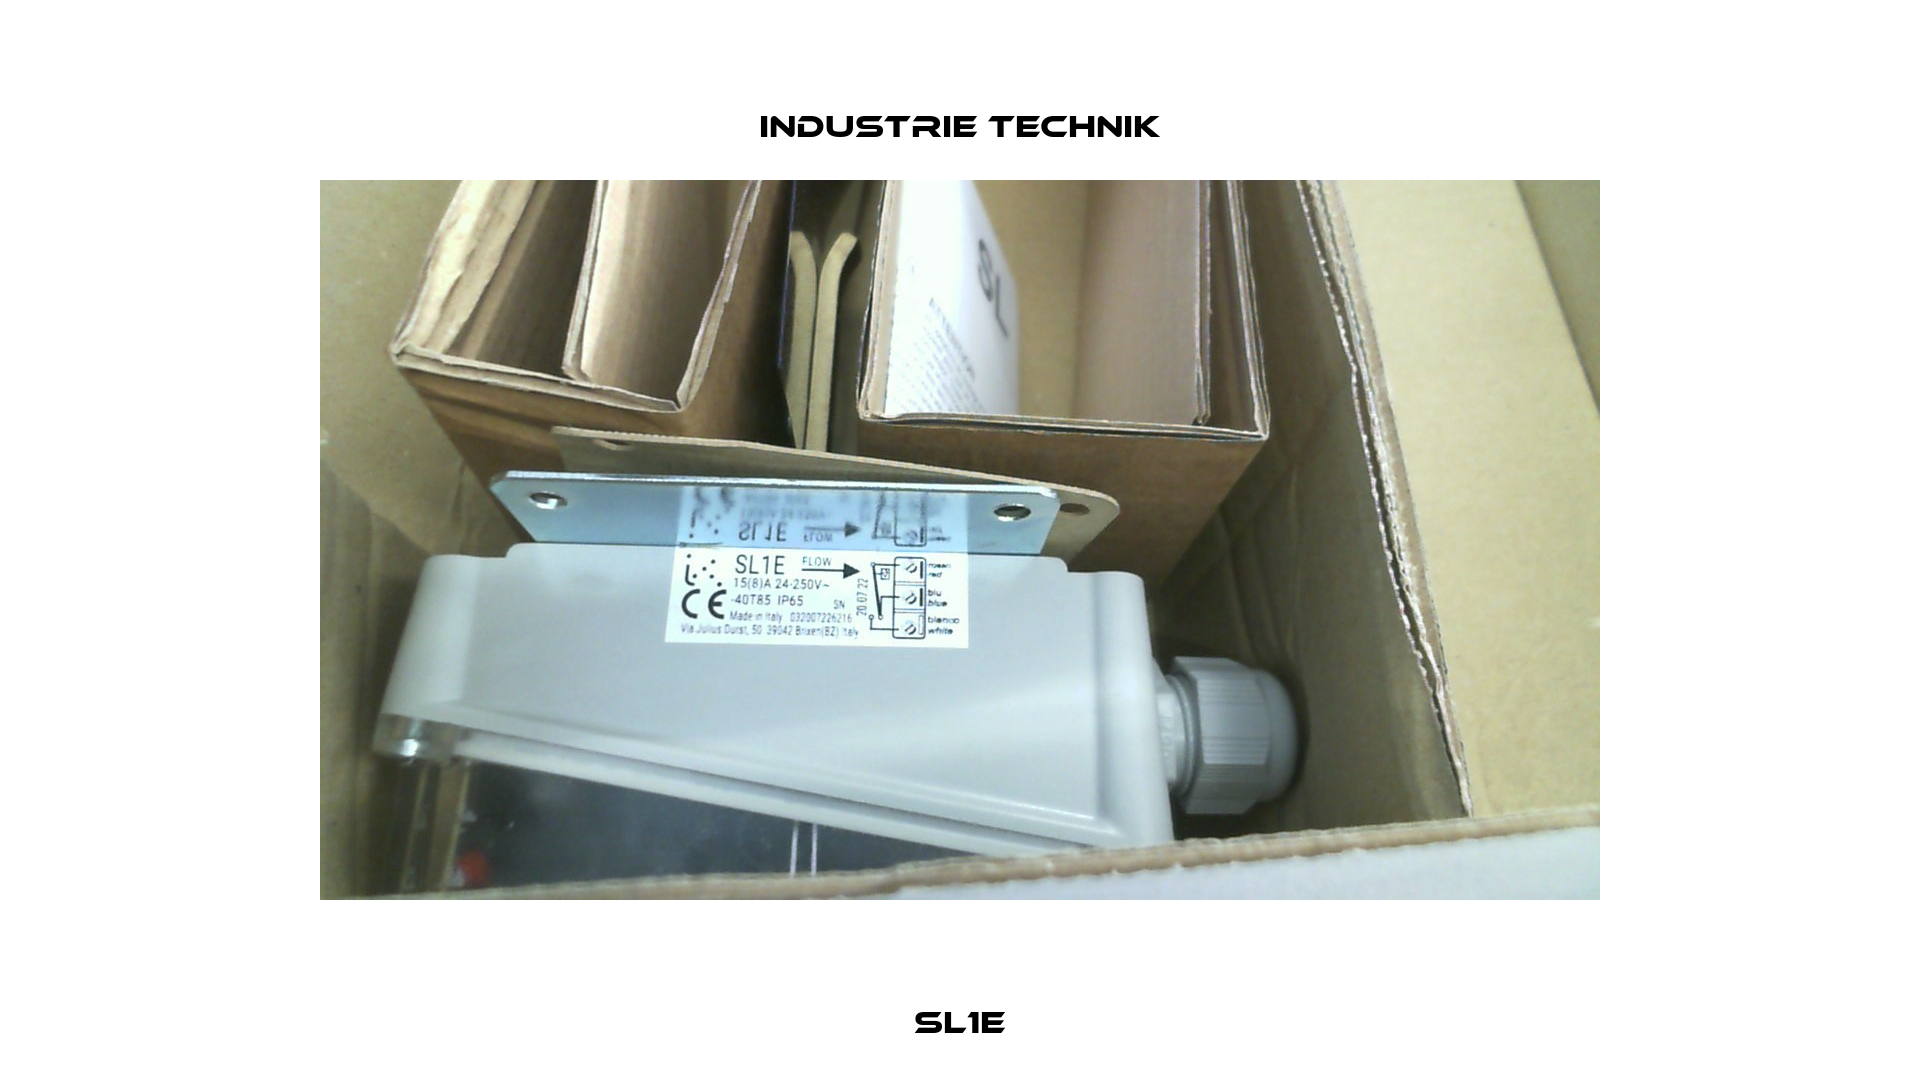 SL1E Industrie Technik